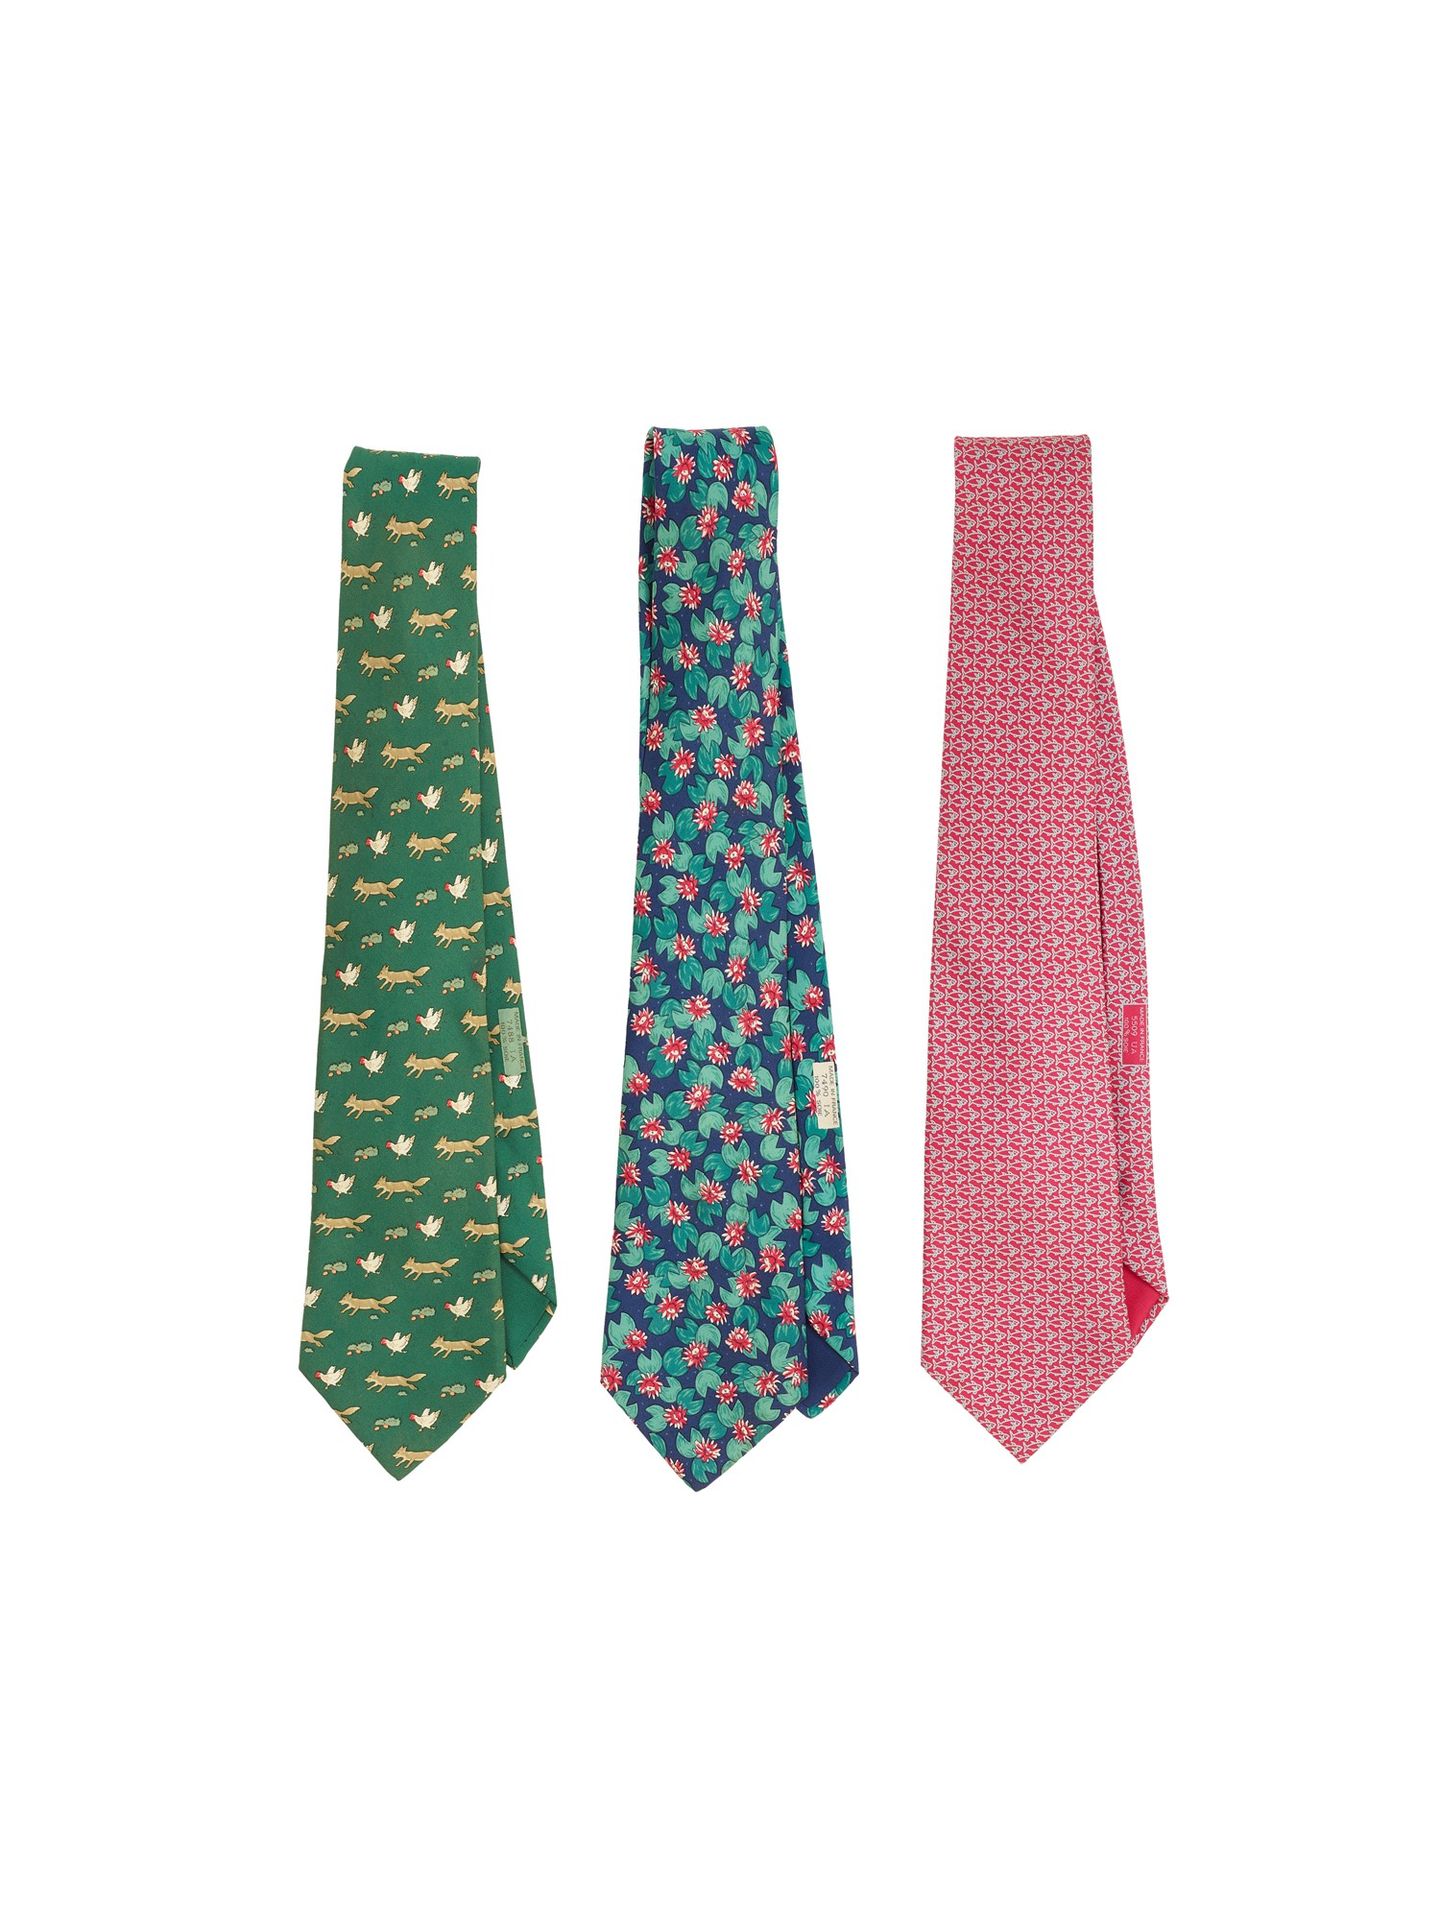 HERMES 由三条爱马仕丝质领带组成的拍品。状况极佳。





 





 

本拍品由三条爱马仕丝绸领带组成。条件非常好。